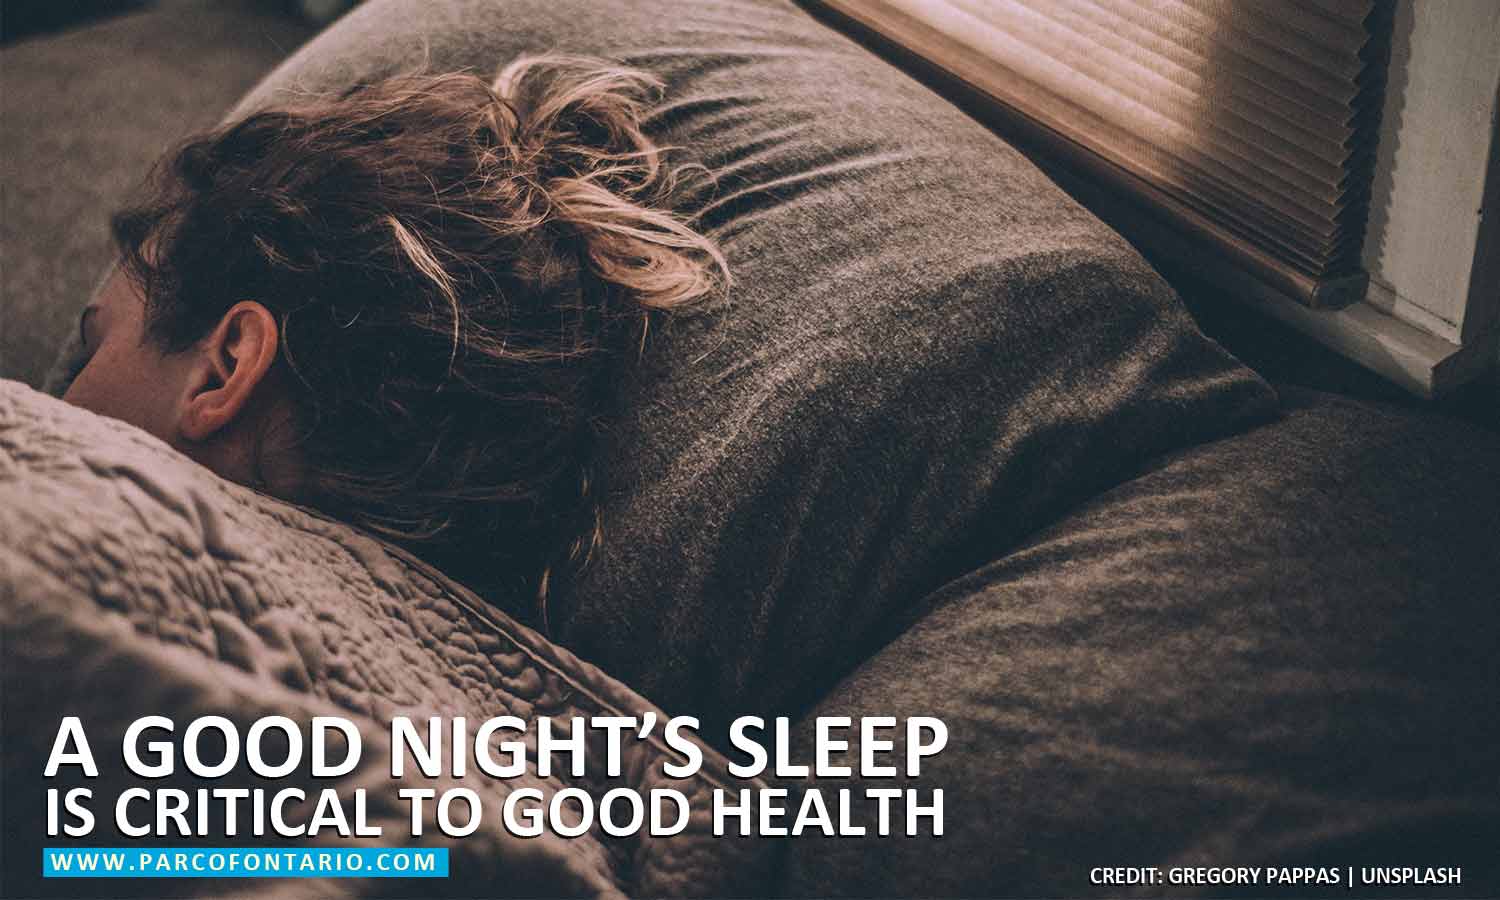 good night’s sleep is critical to good health